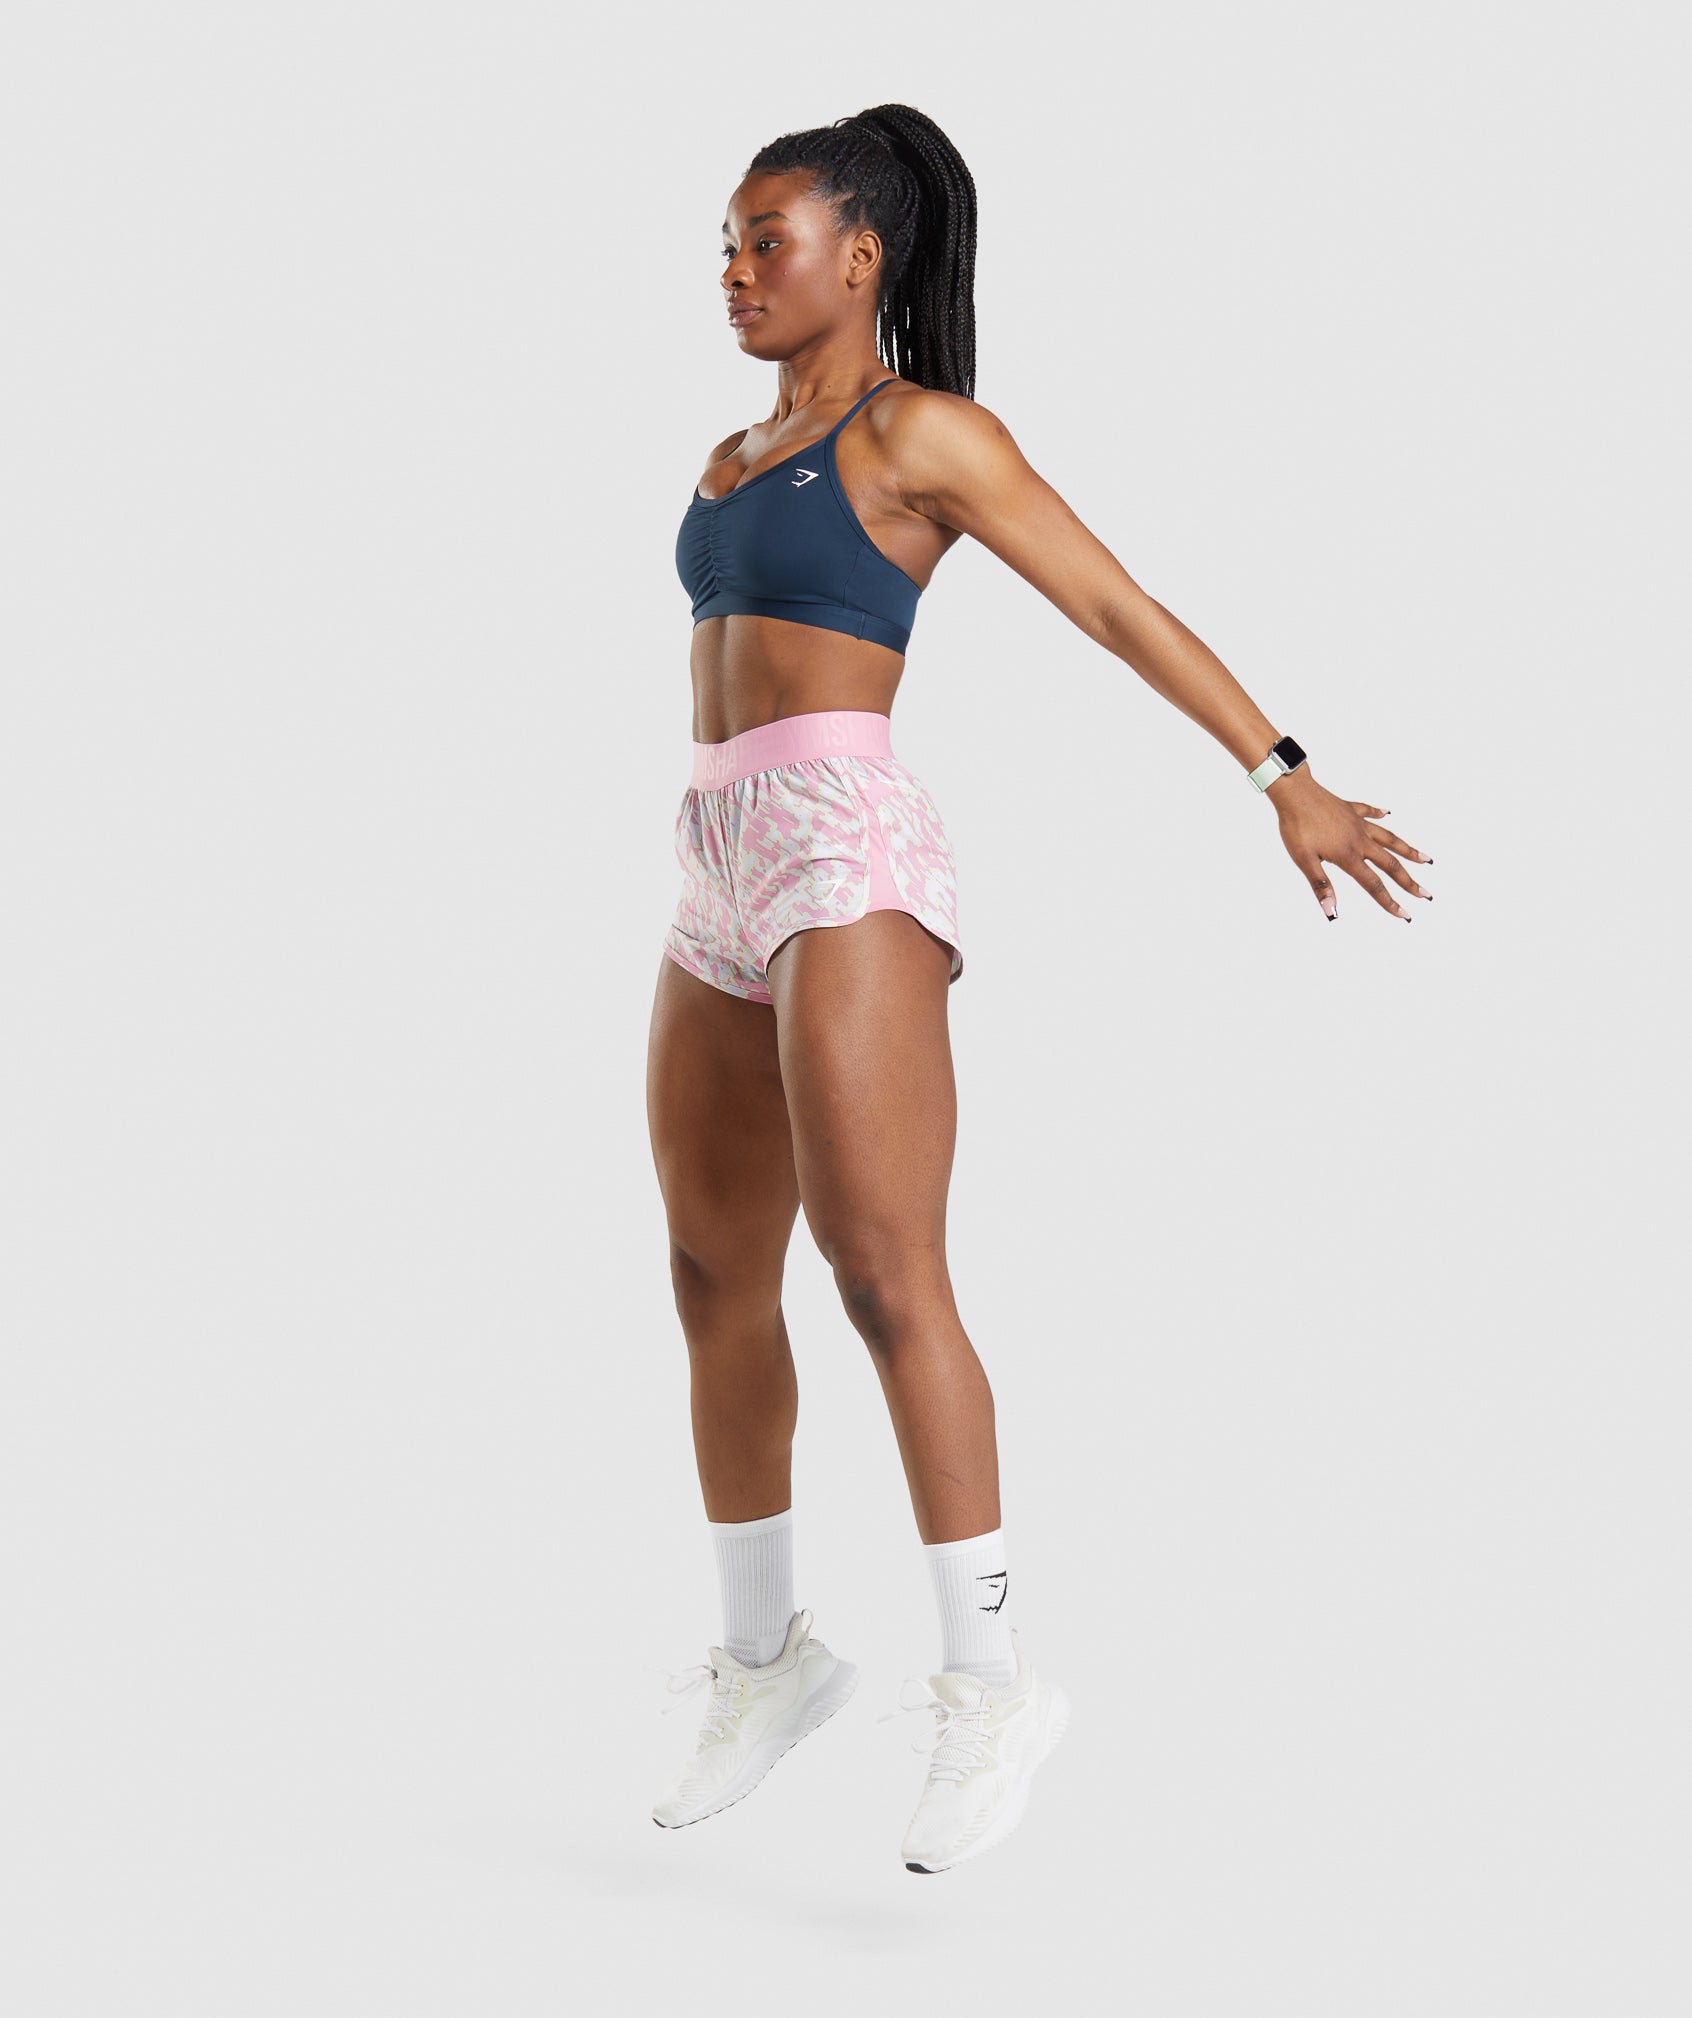 Women's Gym Shorts & Workout Shorts - Gymshark